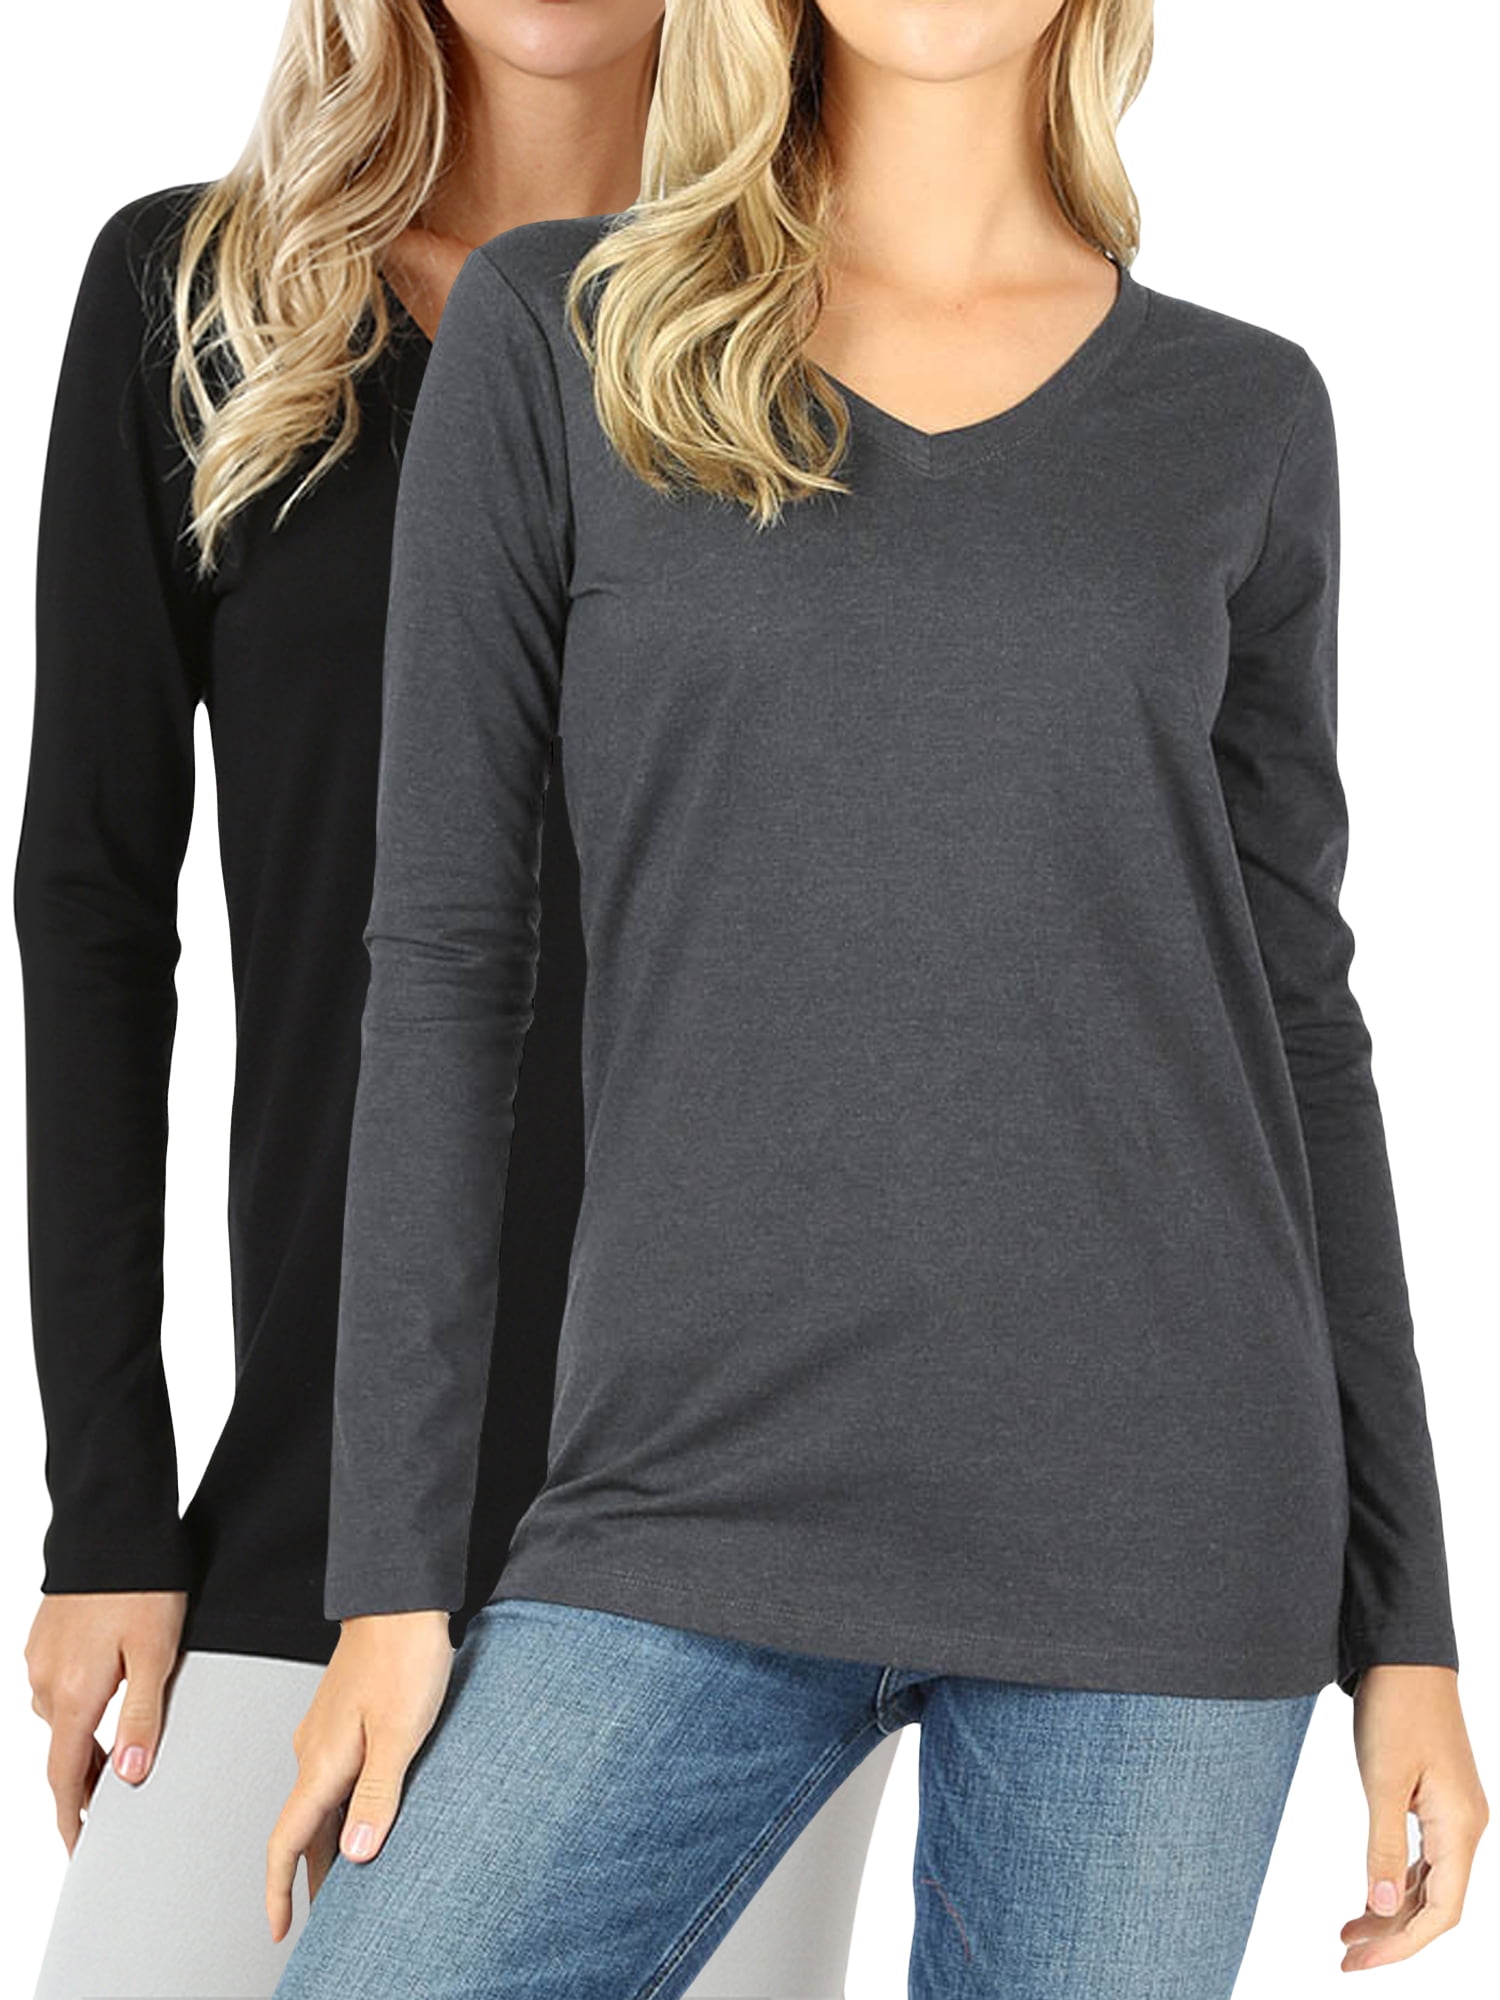 Womens T-Shirts Slim Long Sleeve v Neck T Shirts Sweatshirts Cotton Black t-Shirt Tops Jinjiums